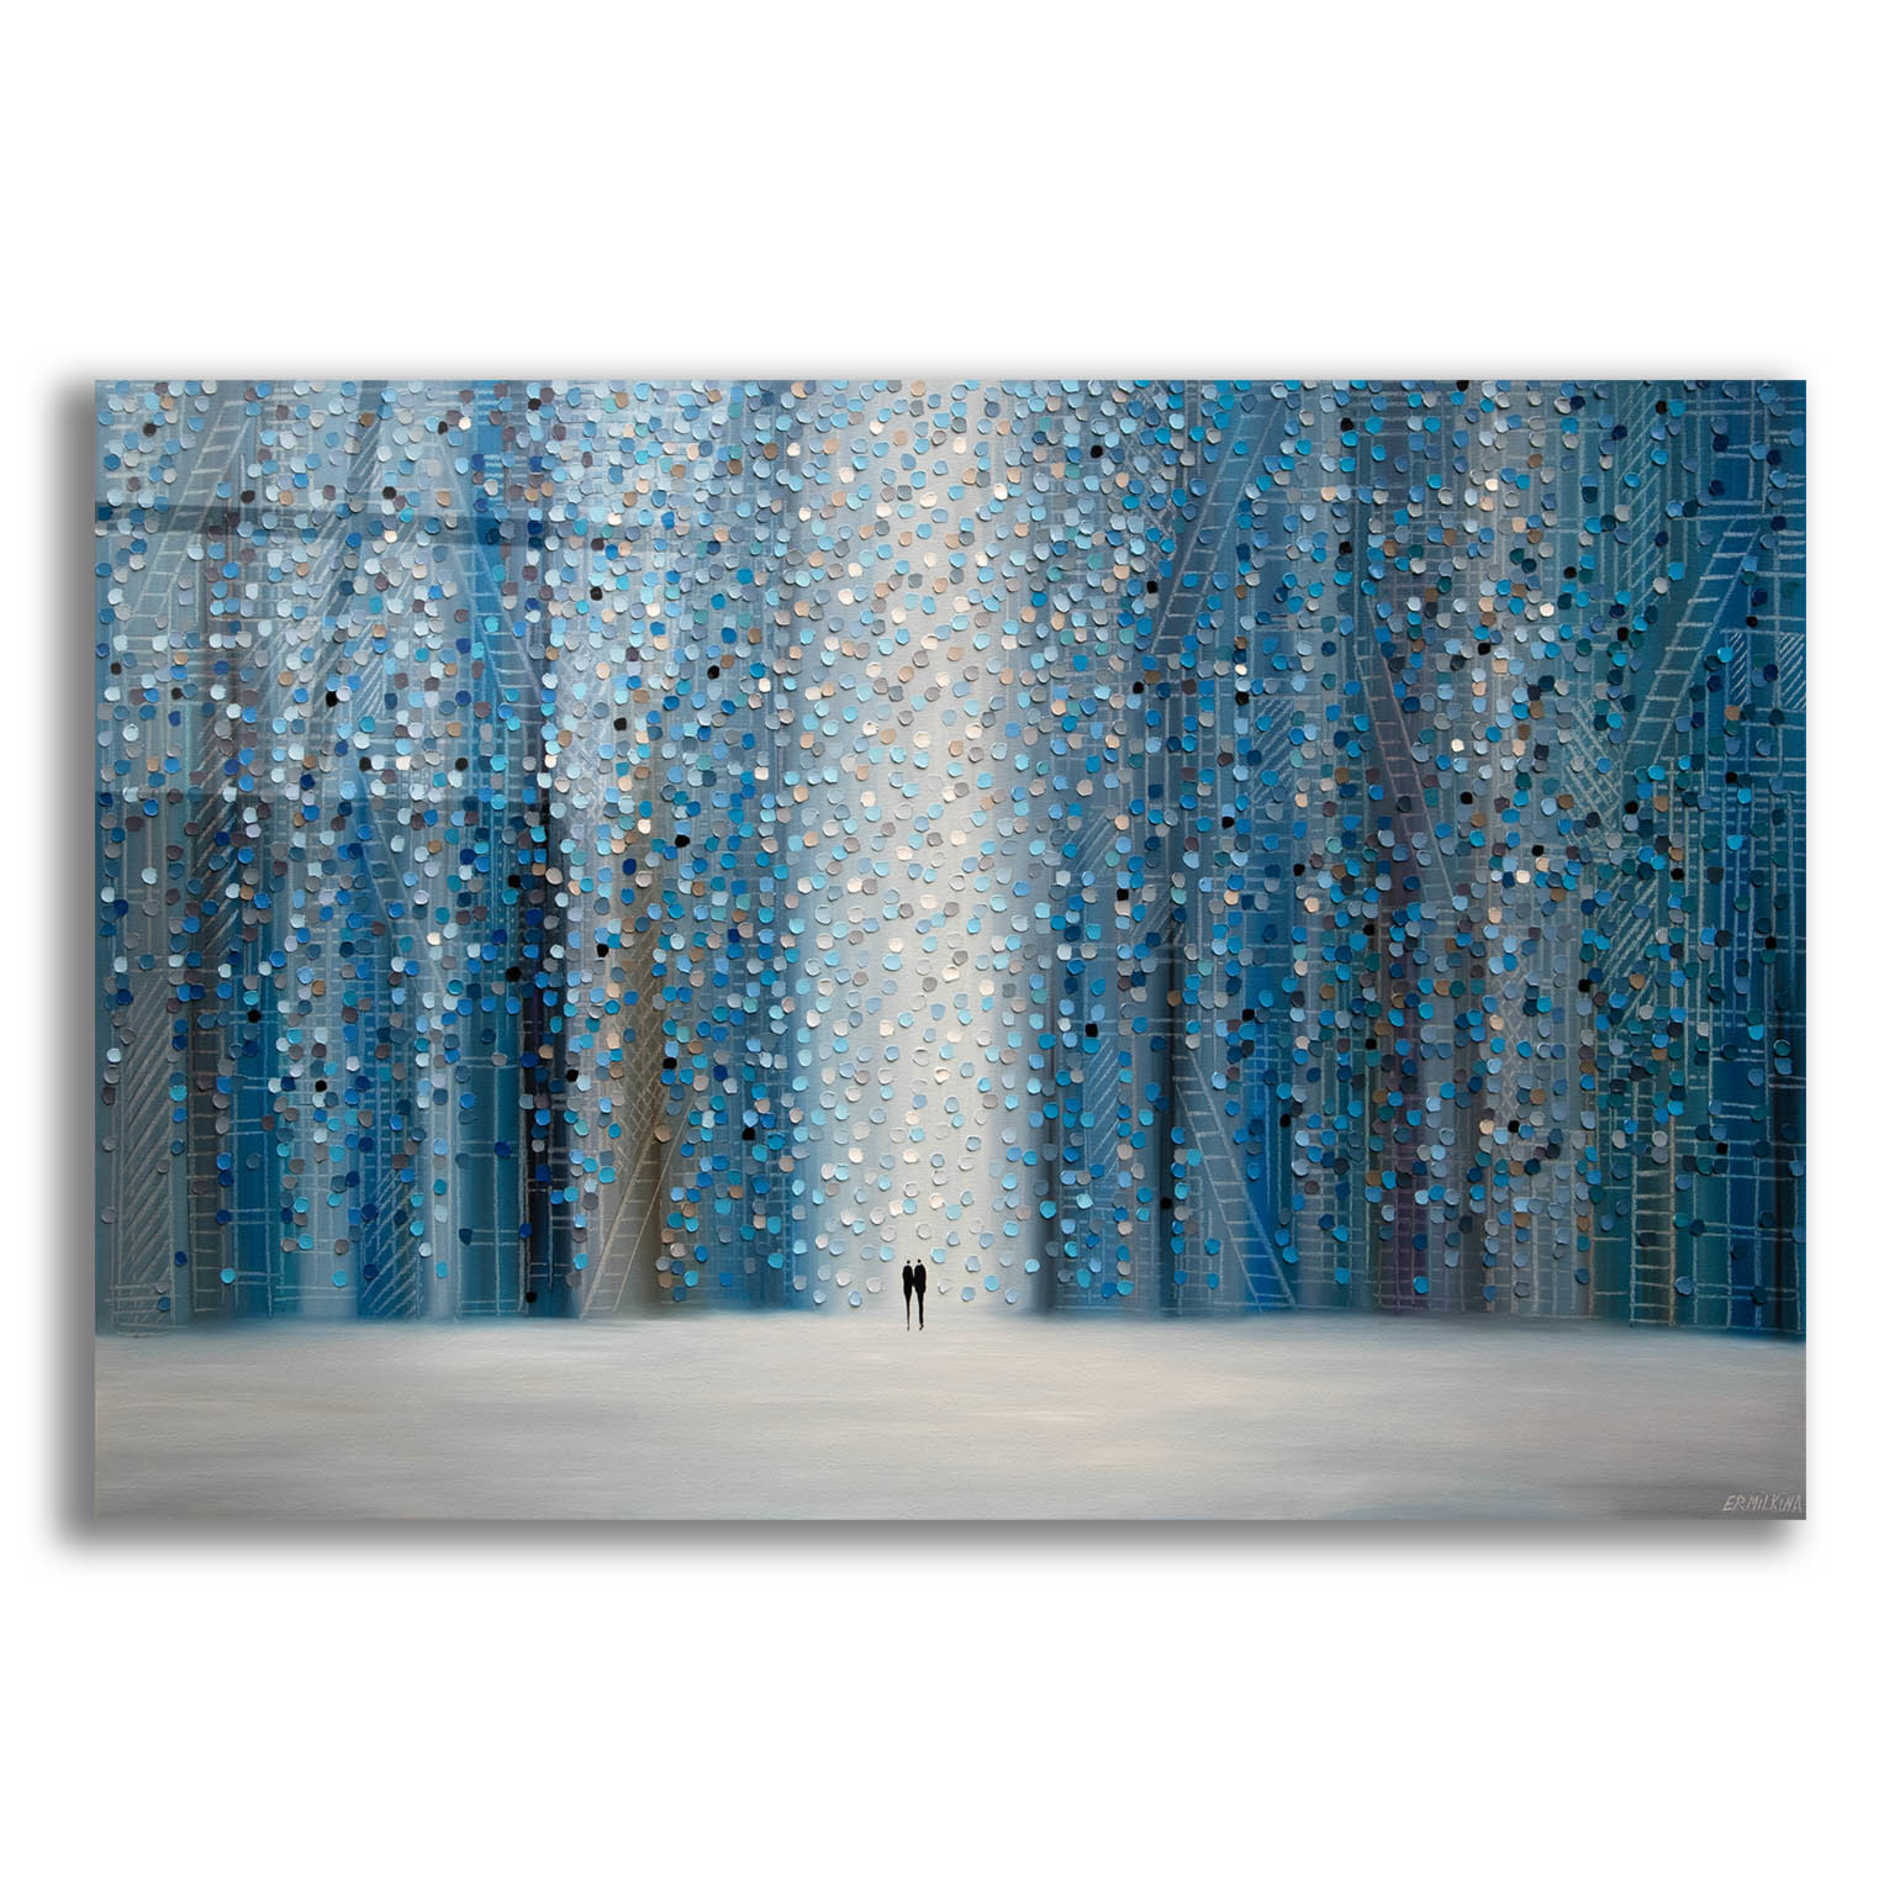 Epic Art 'Sounds Of The Rain' by Ekaterina Ermilkina Acrylic Glass Wall Art,24x16